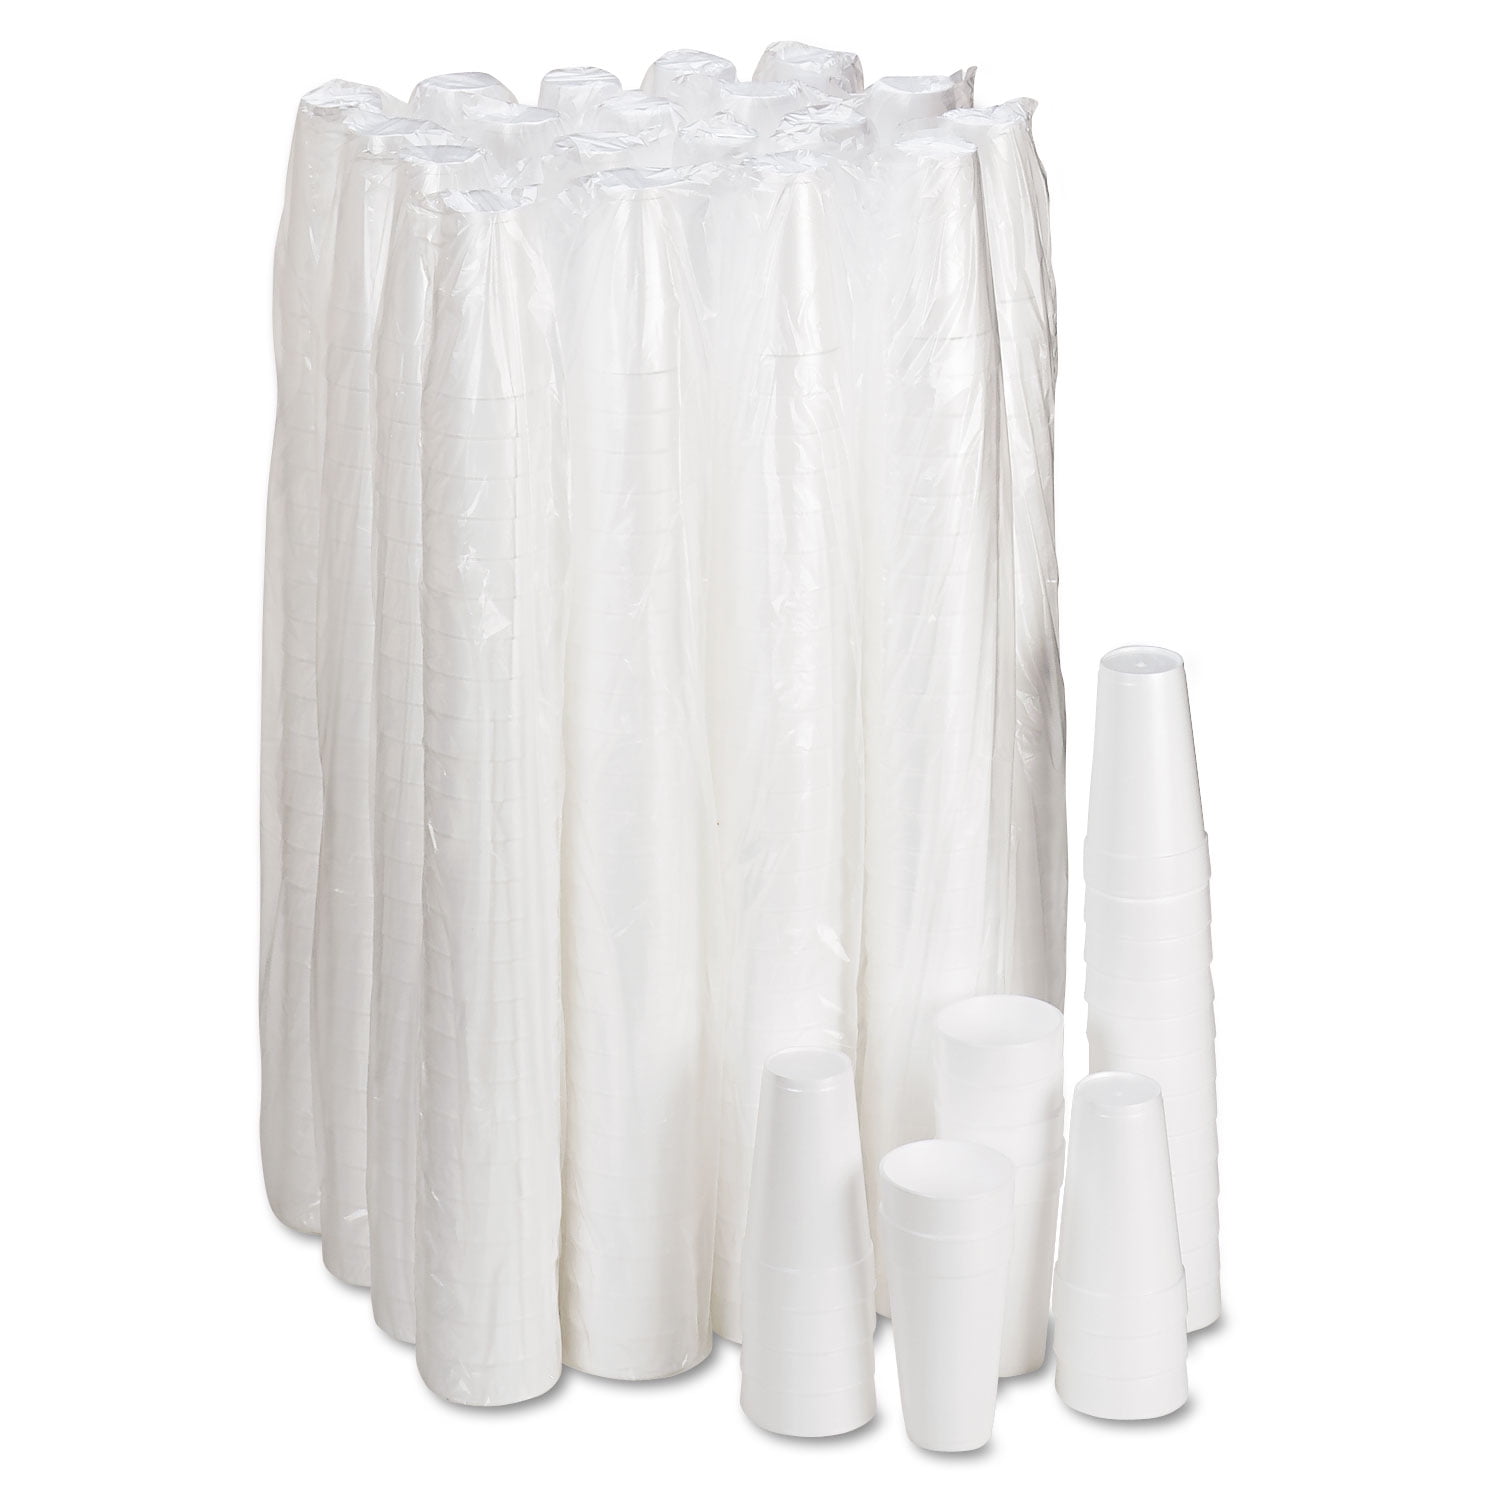 Dart® J Cups® Insulated Foam Cups 12 oz., White, 1000/Carton – Keen On  Klean Solutions